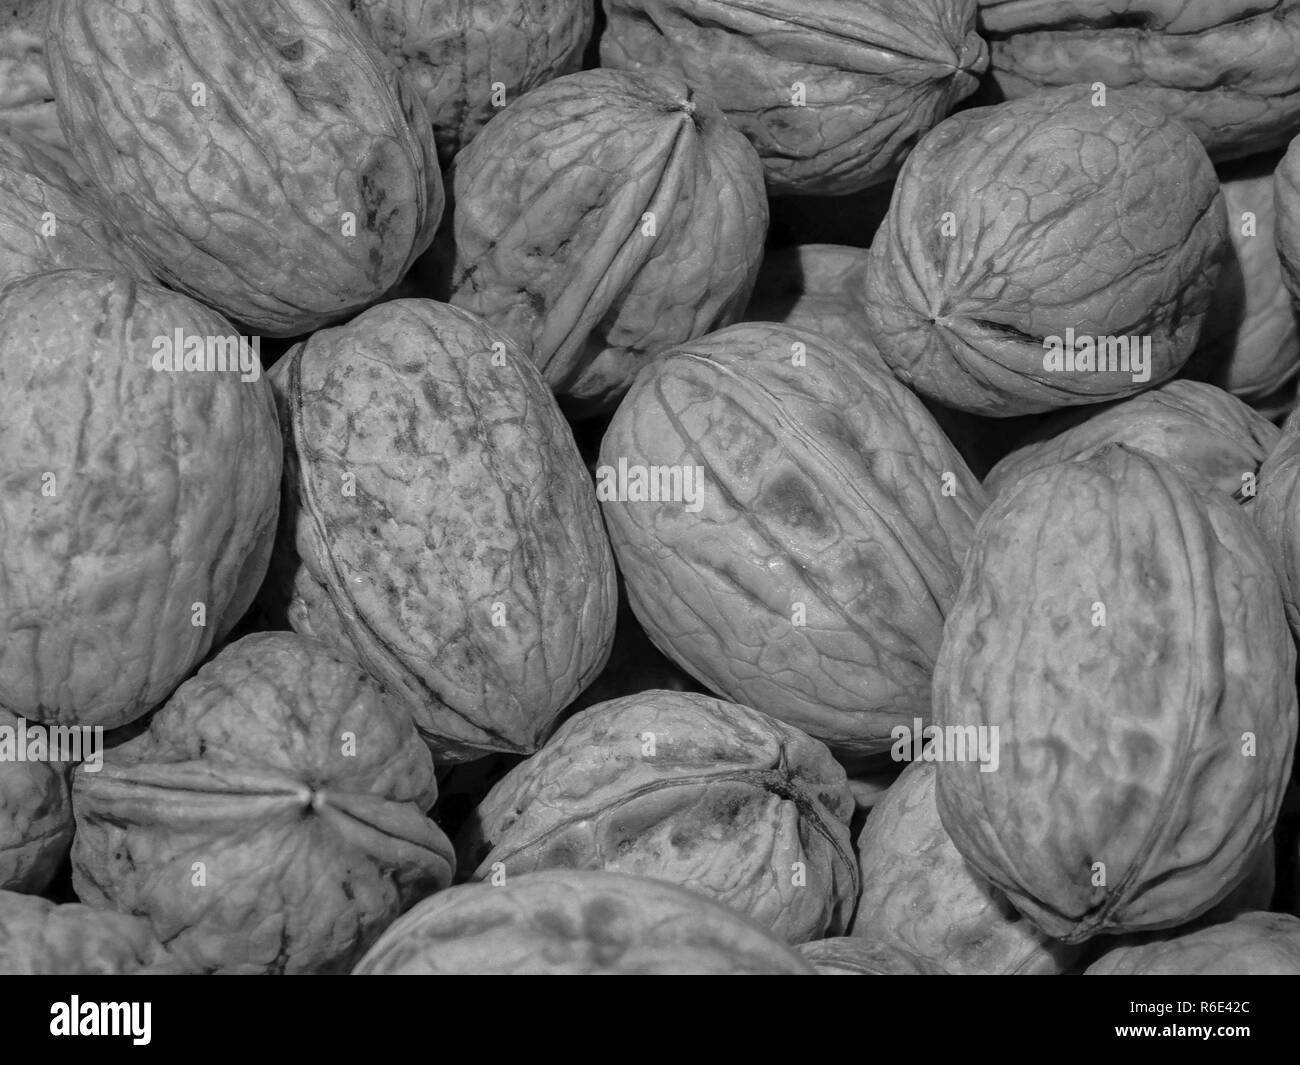 walnuts with shell Stock Photo